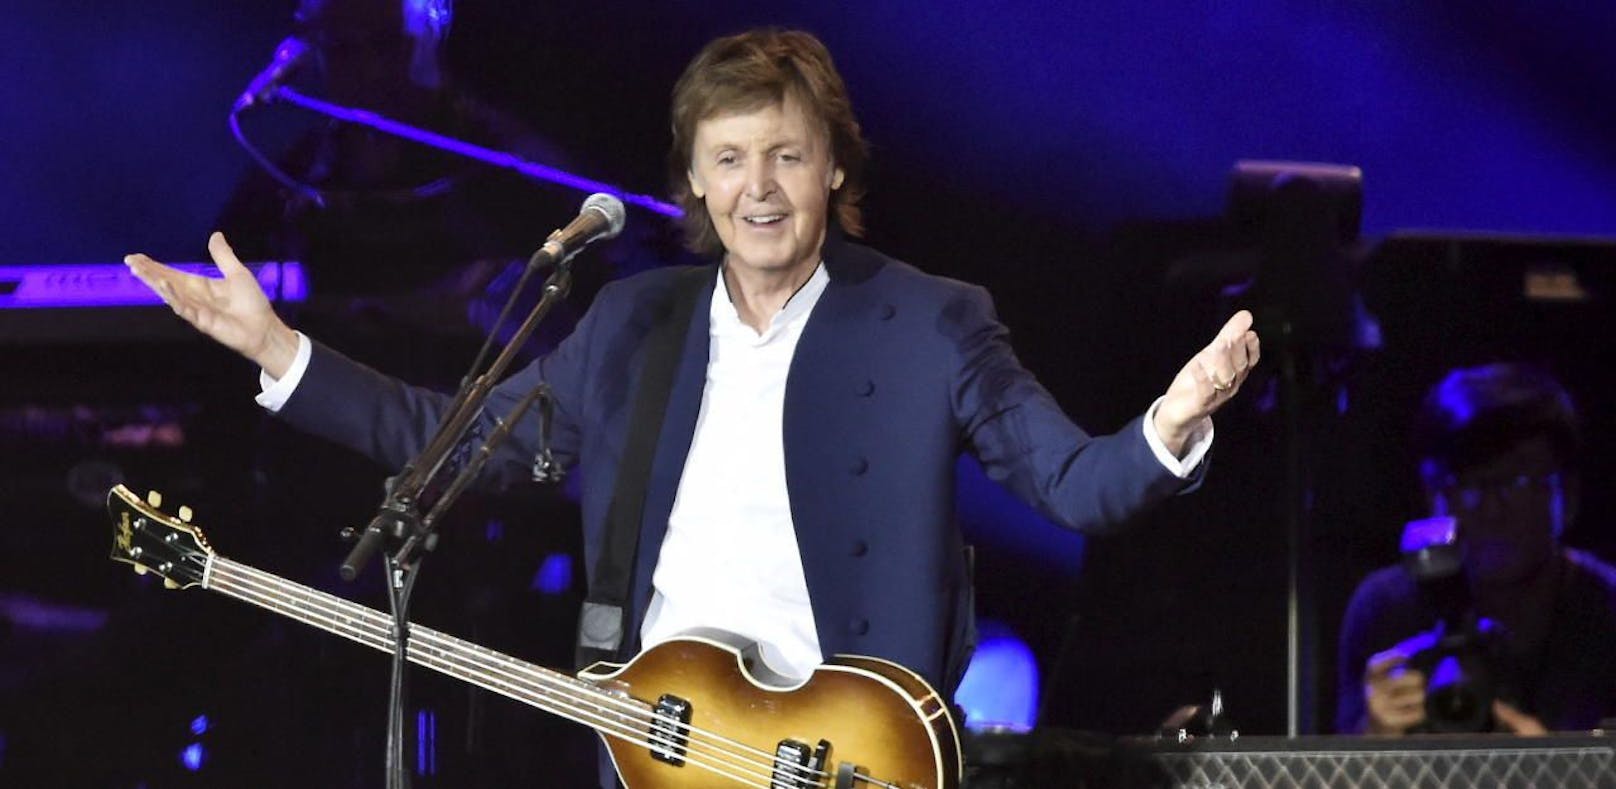 Paul McCartney bringt Song über Donald Trump